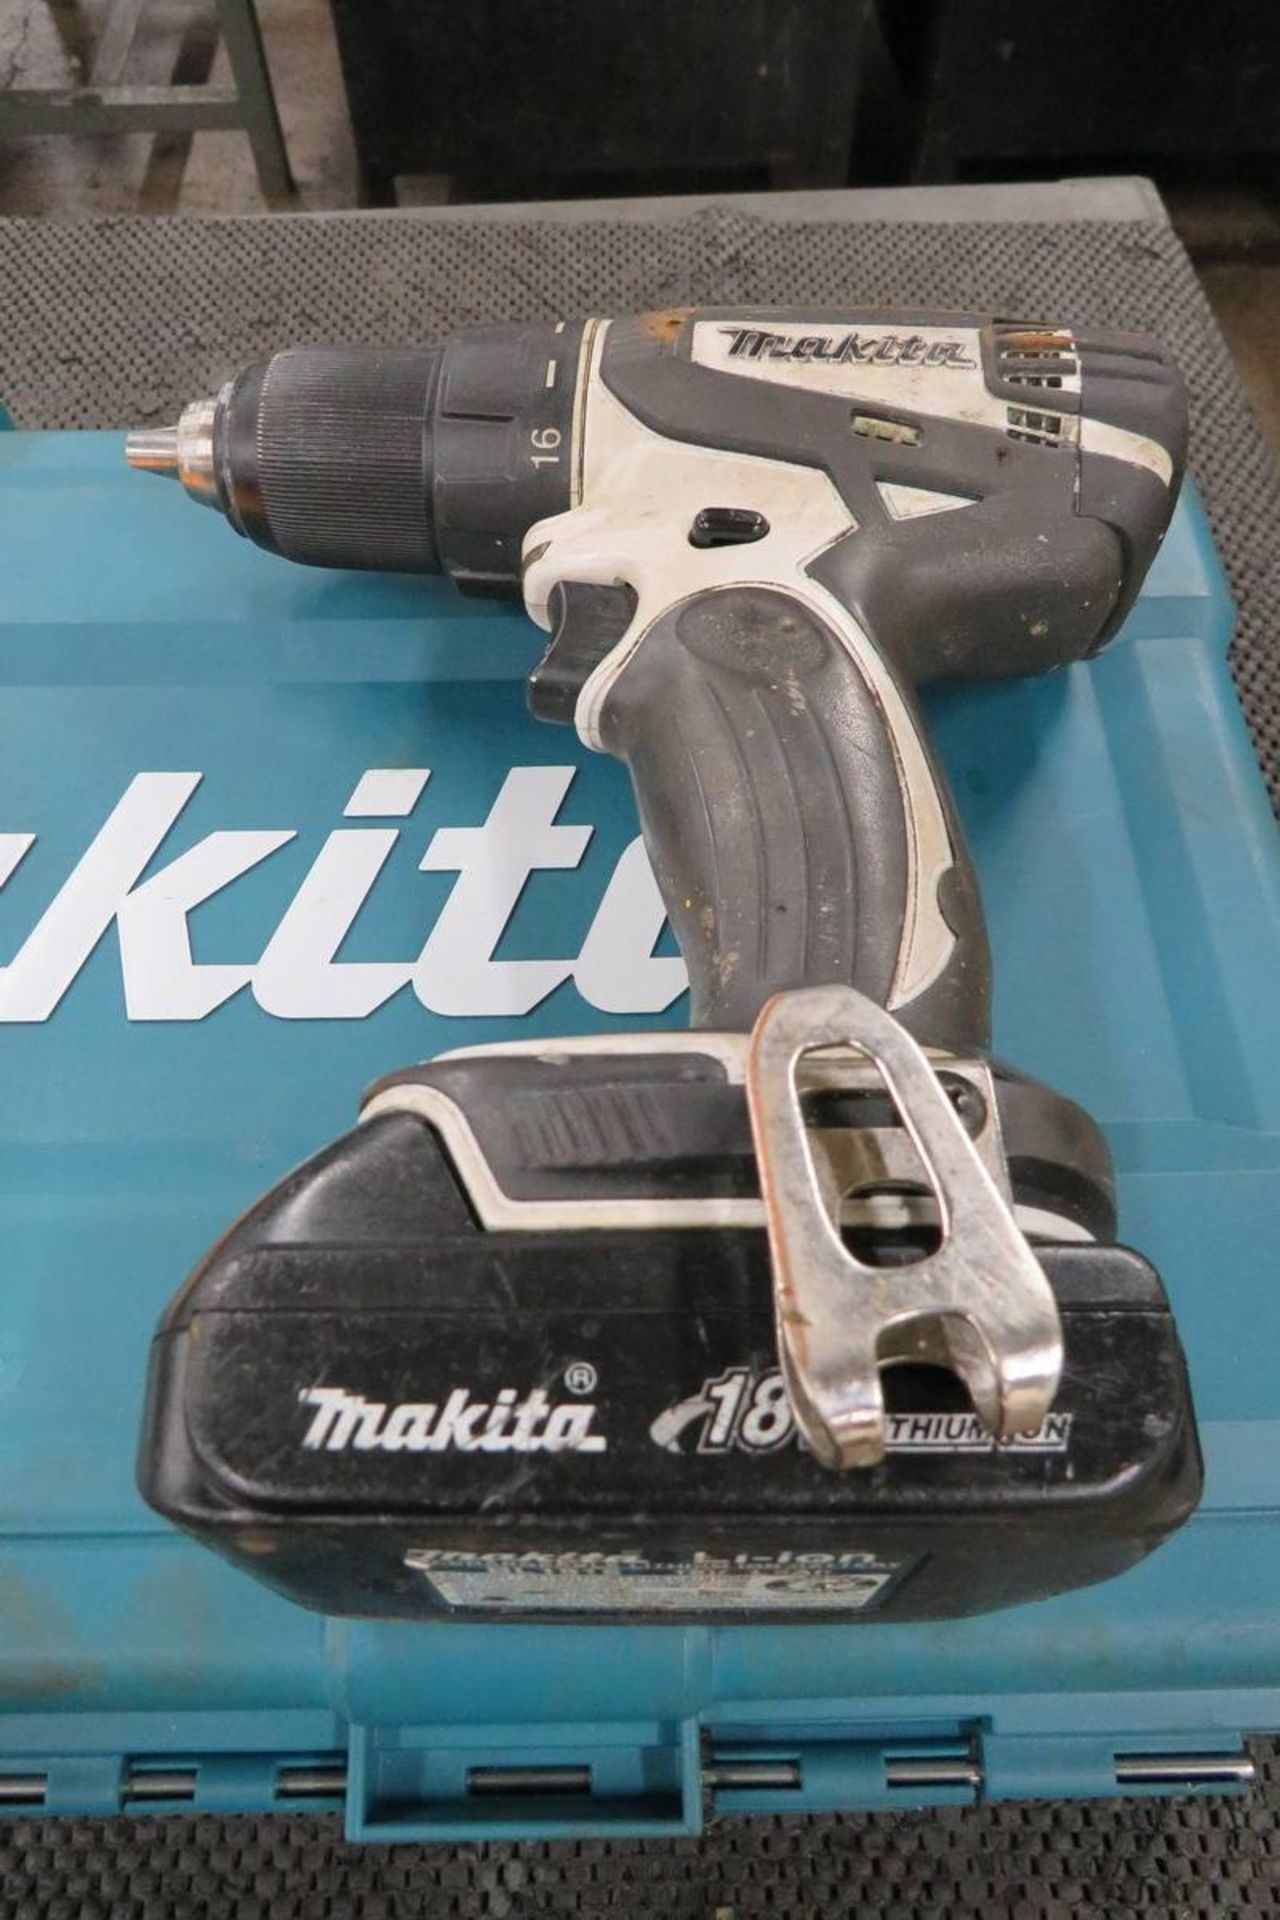 Makita FXFD01 1/2" 18V Cordless Drill - Image 2 of 3